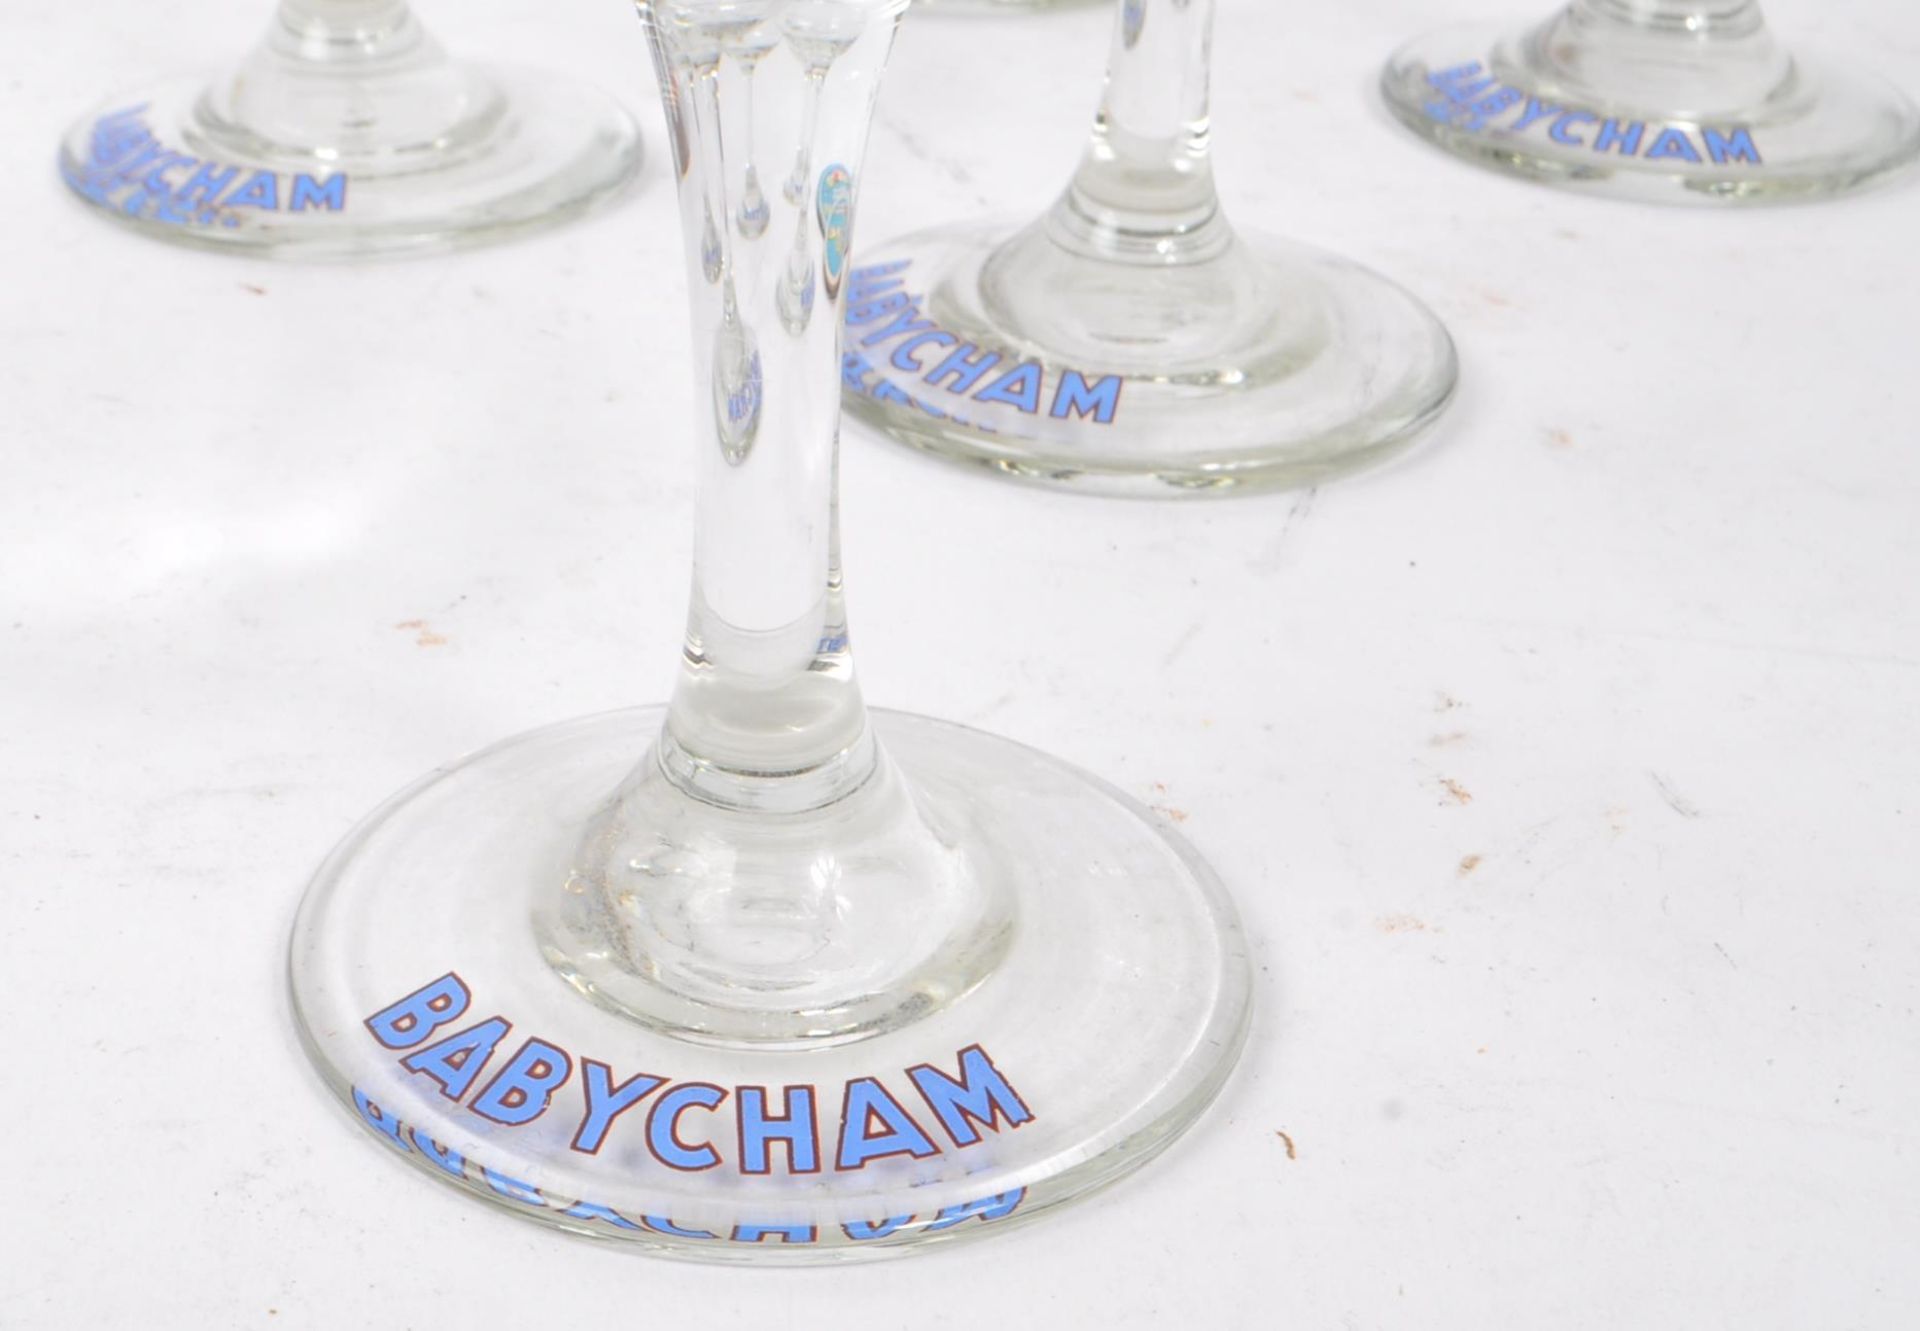 BABYCHAM - COLLECTION OF BRANDED DRINKING GLASSES - Bild 6 aus 7